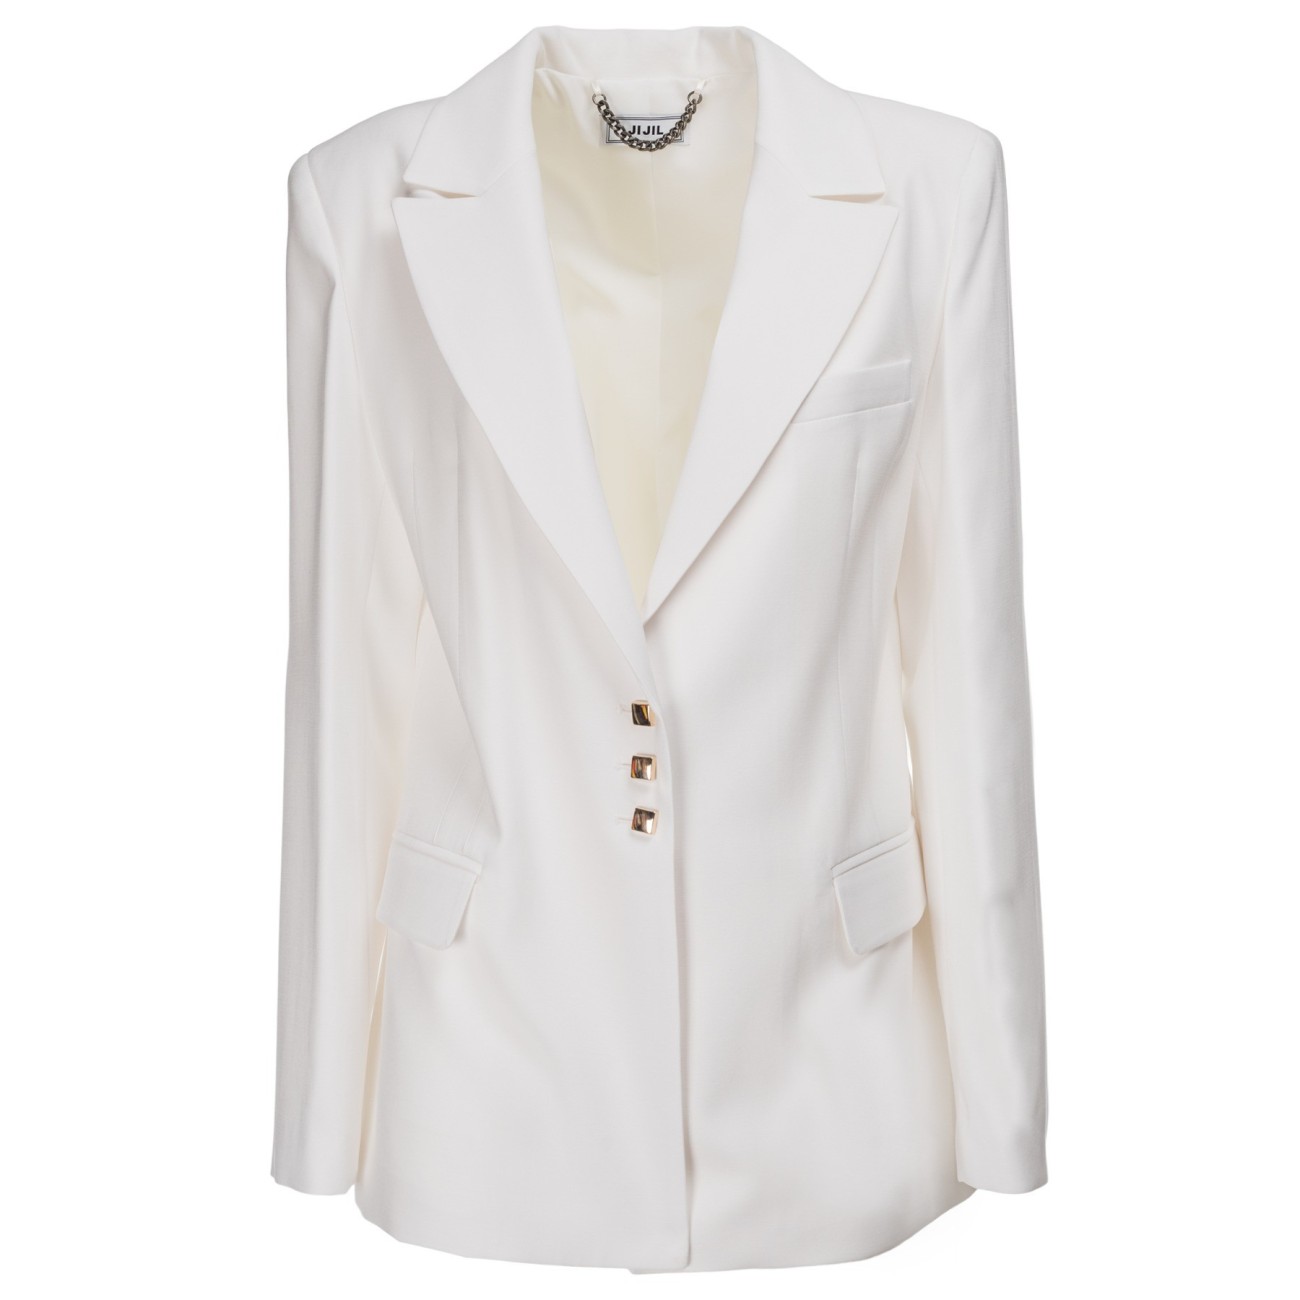 Jijil white elegant jacket